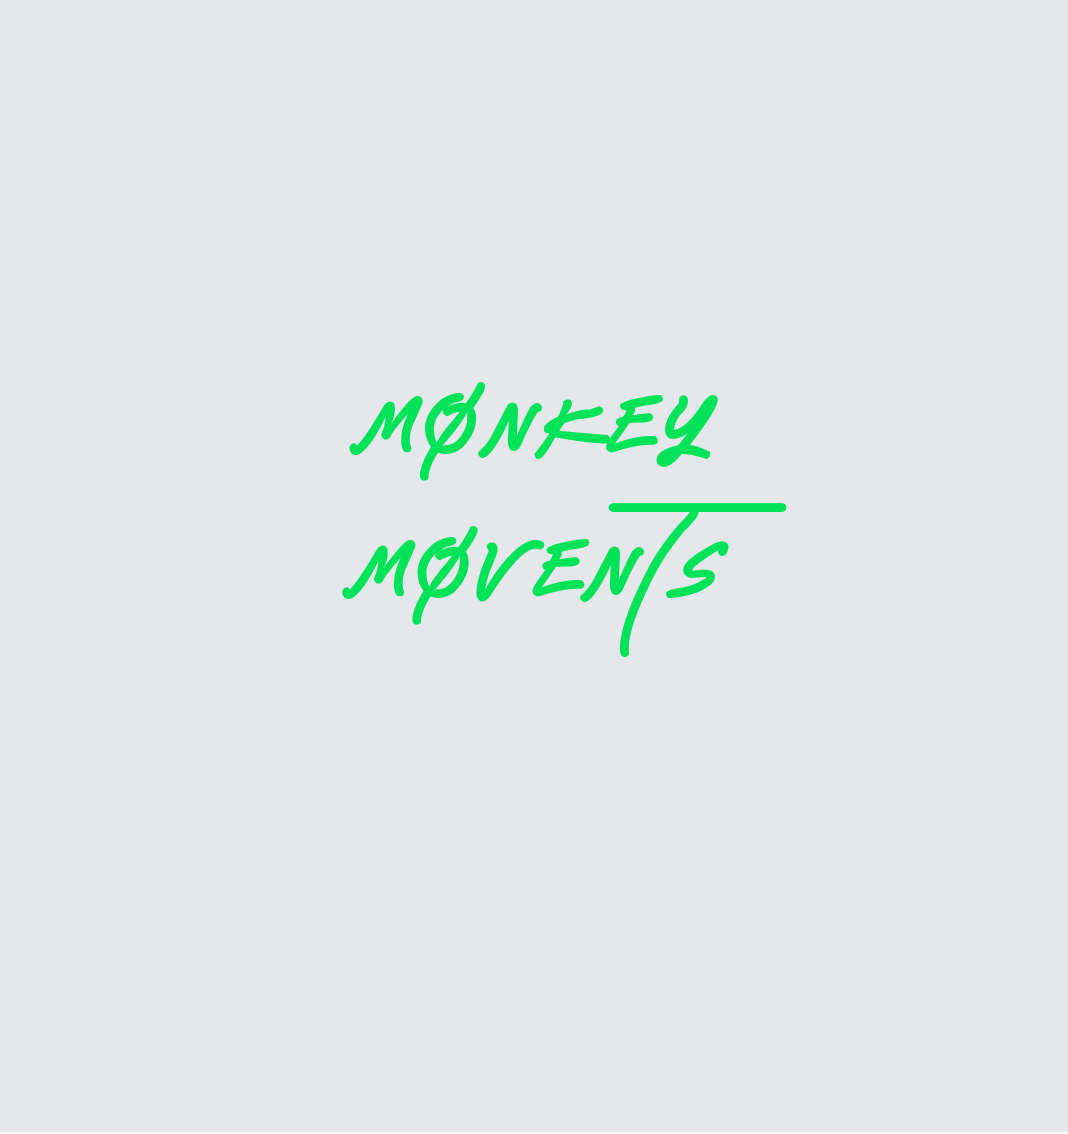 Custom neon sign - Monkey  Movents